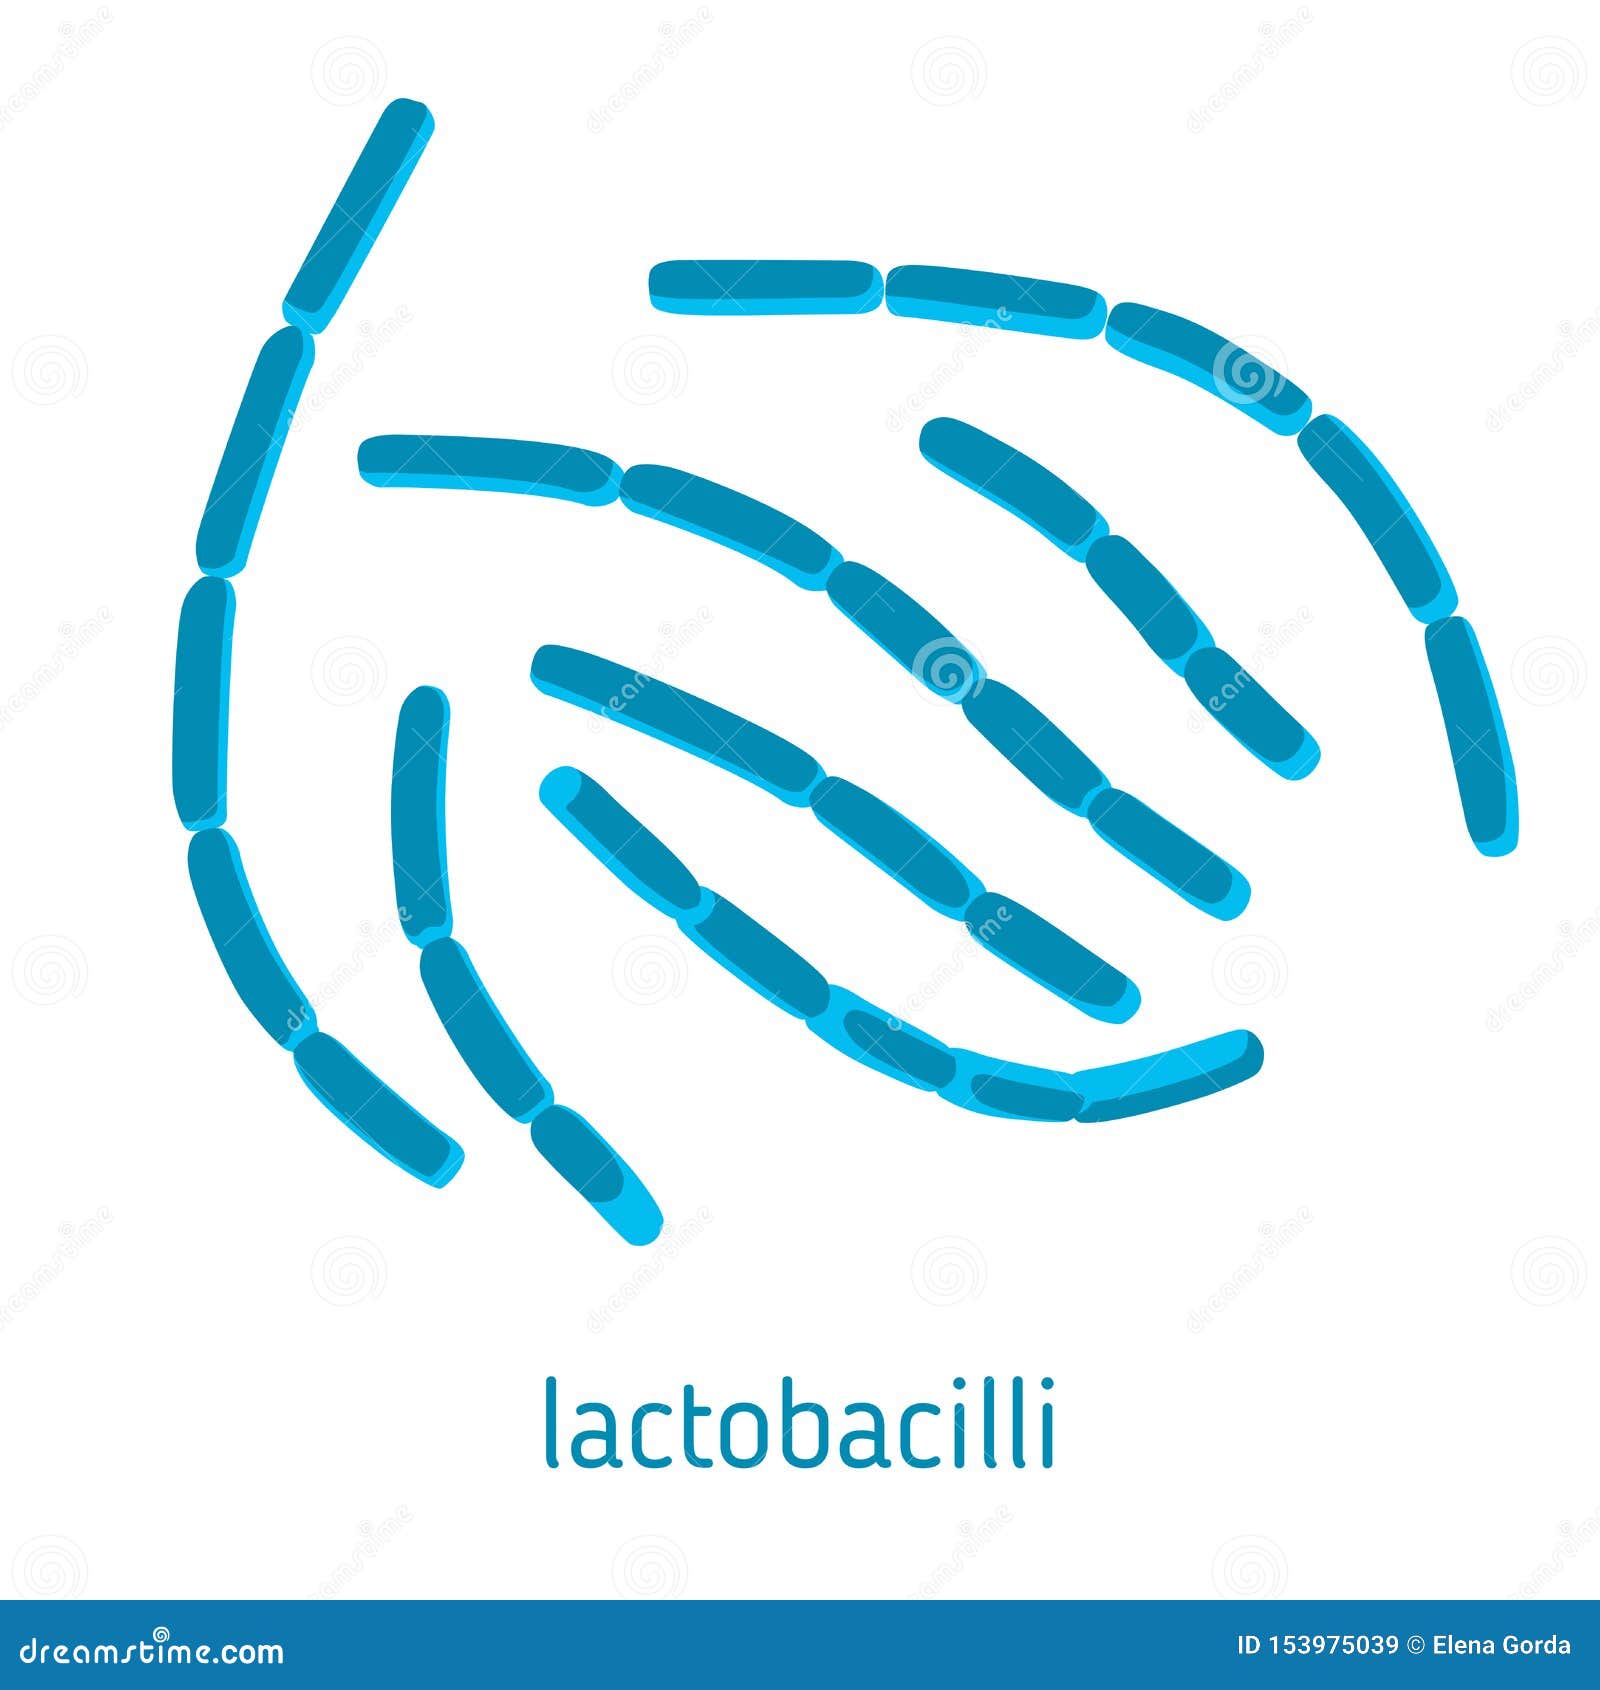   of lactobacilli